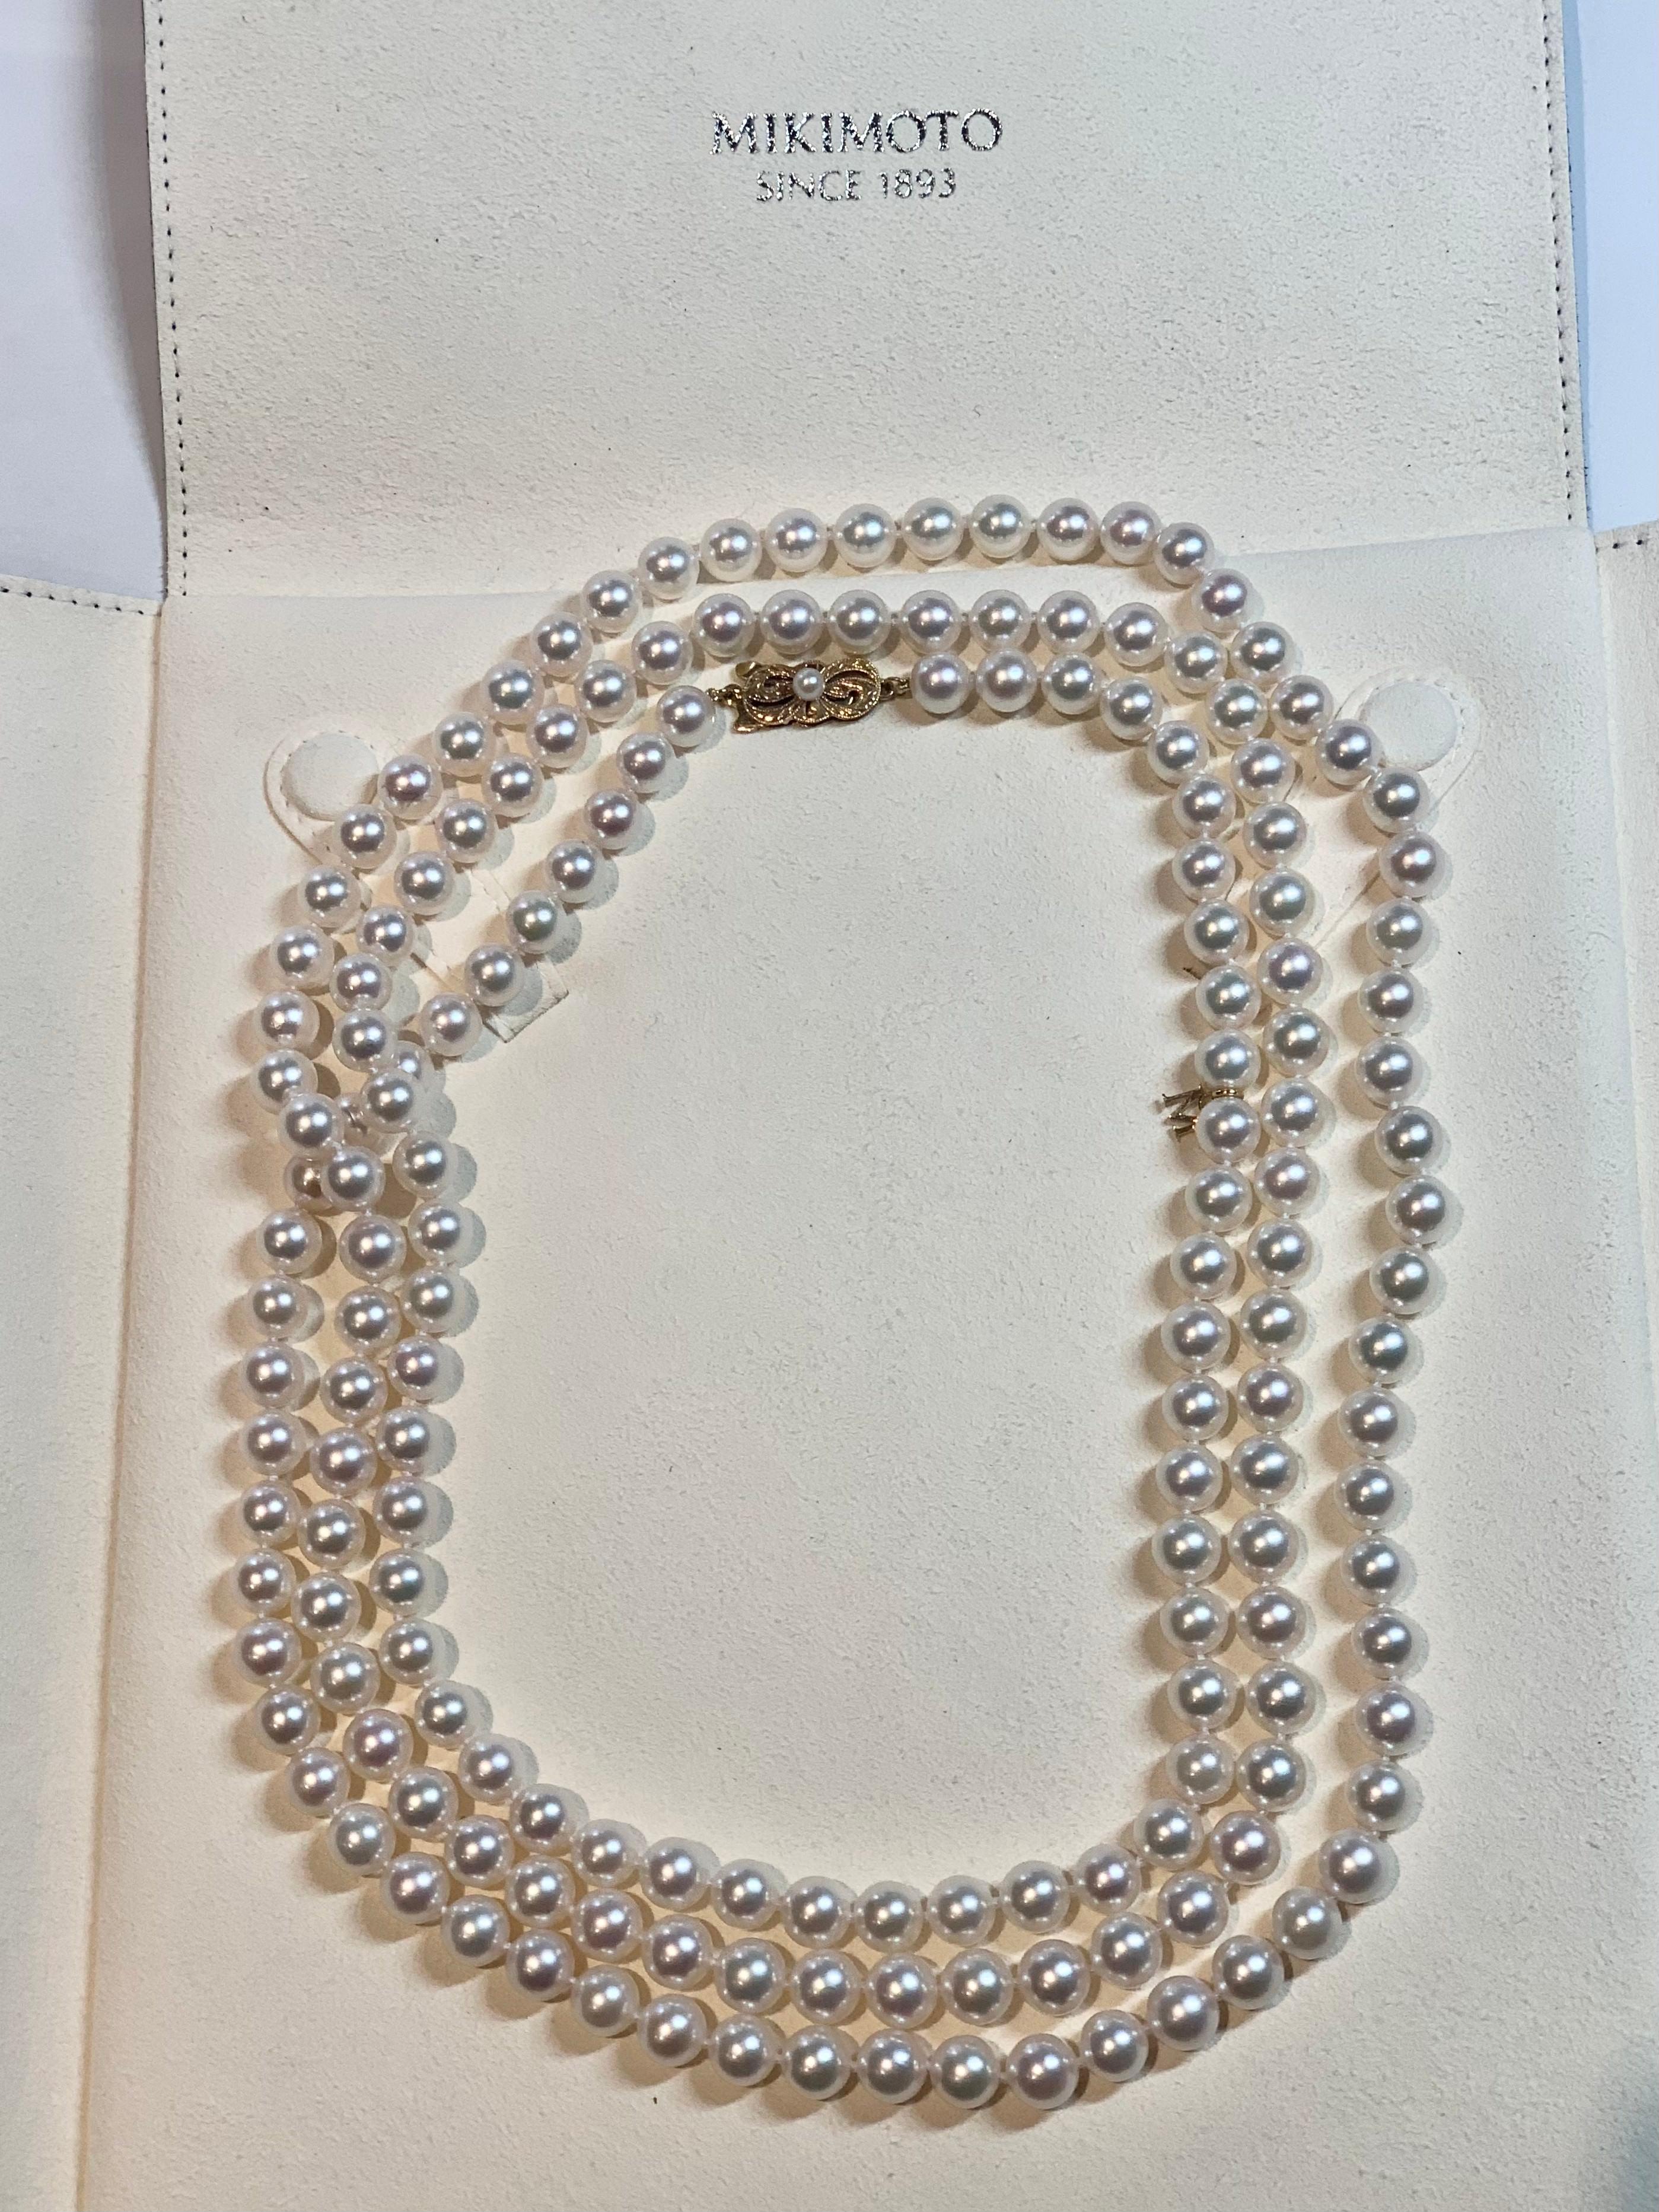 Mikimoto Estate Akoya Pearl Necklace 18k Gold Certified 6